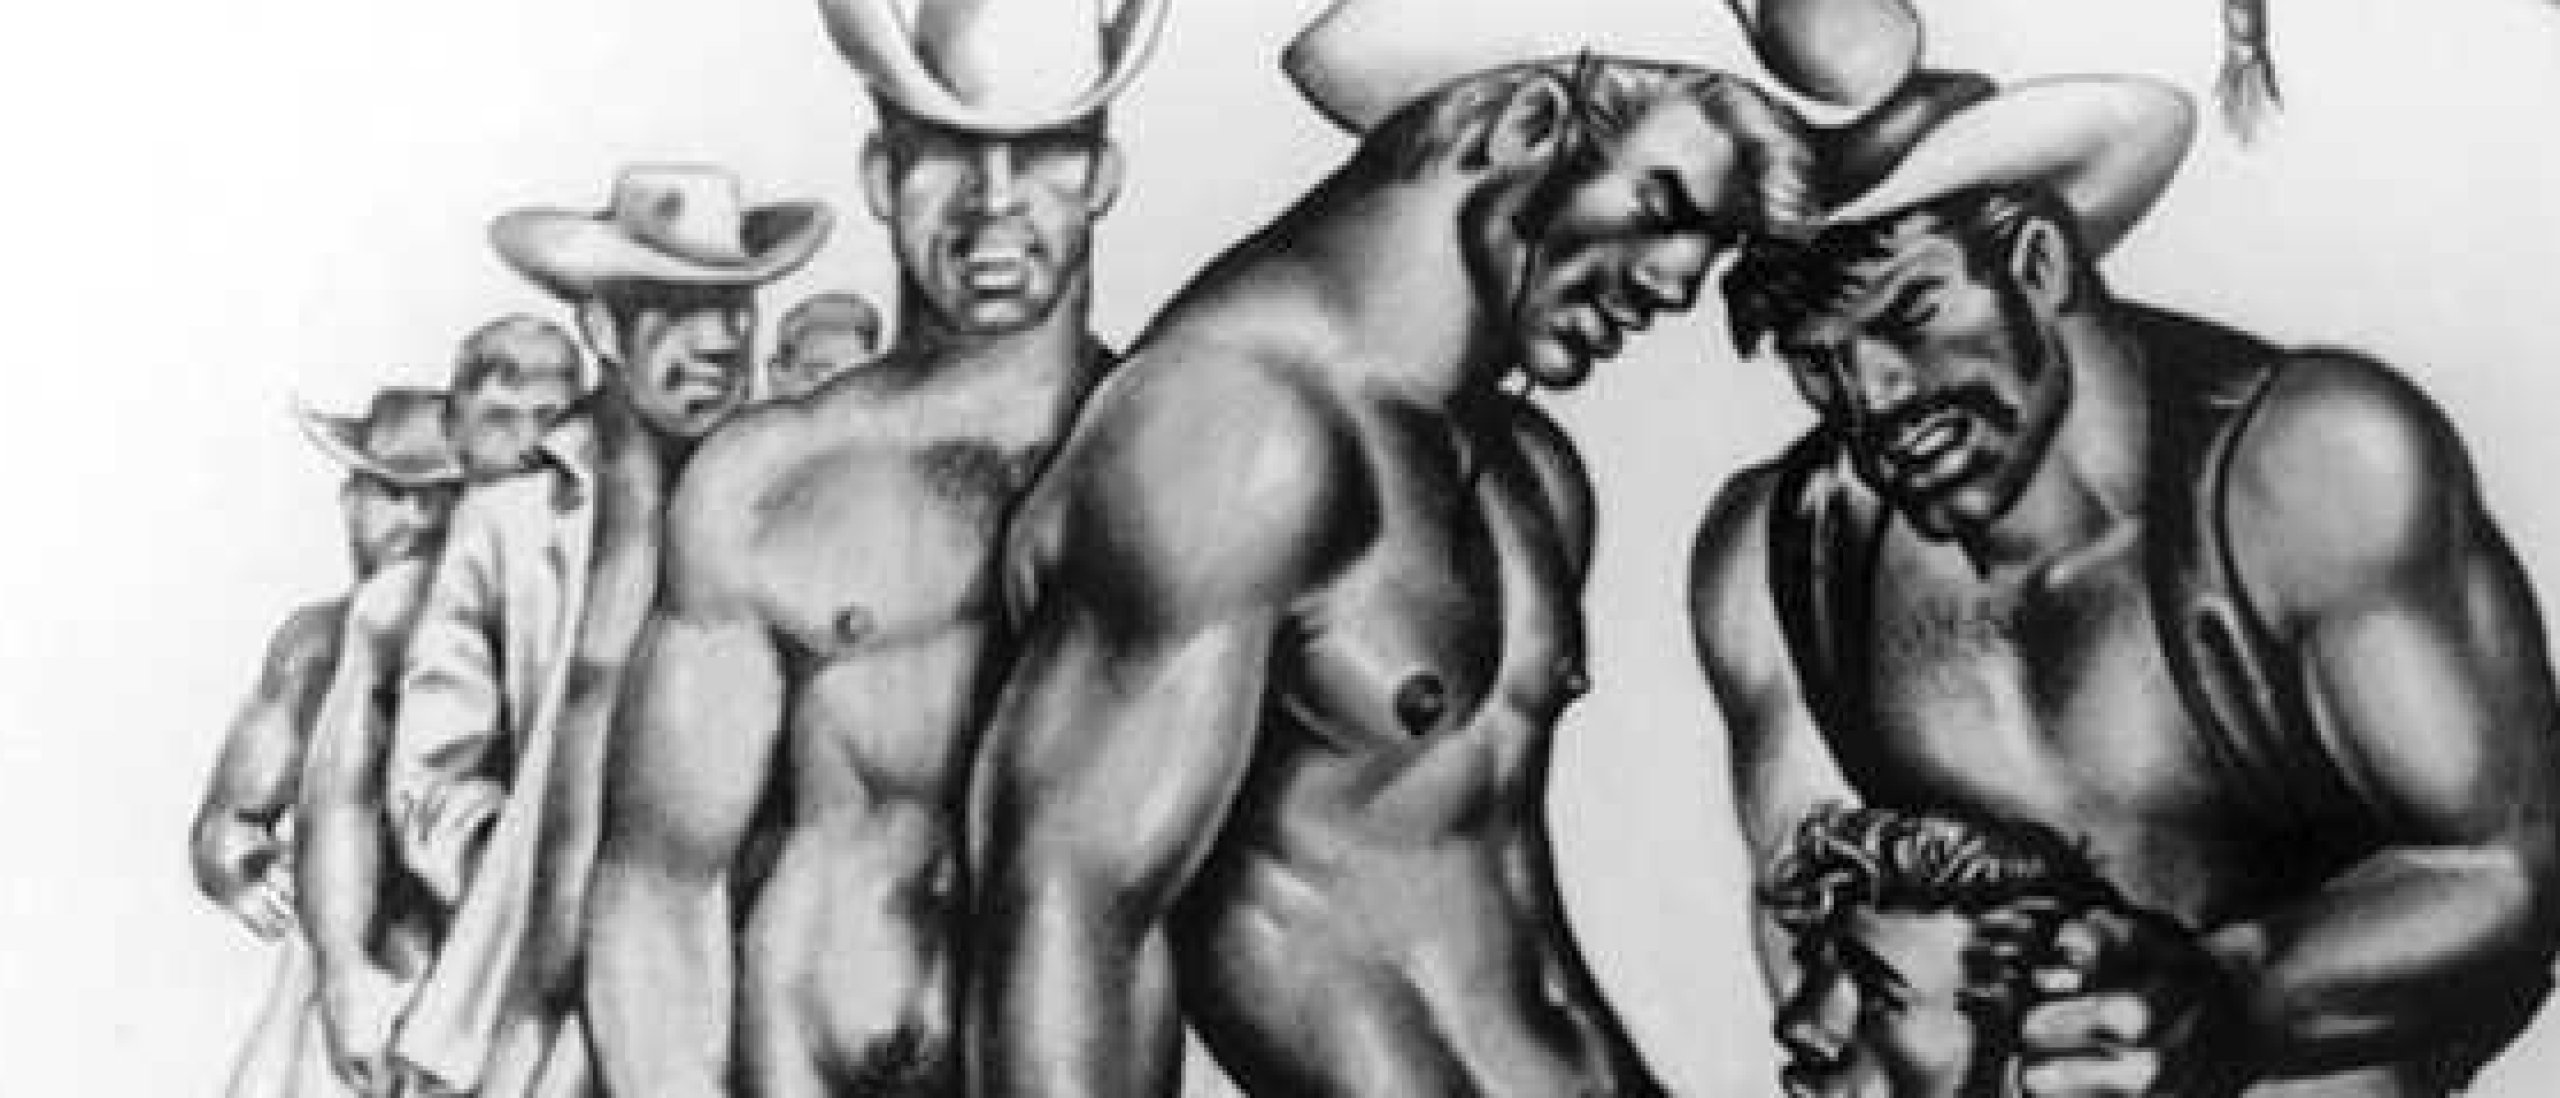 Violent Gay Adventures In The Art Of Dom Orejudos